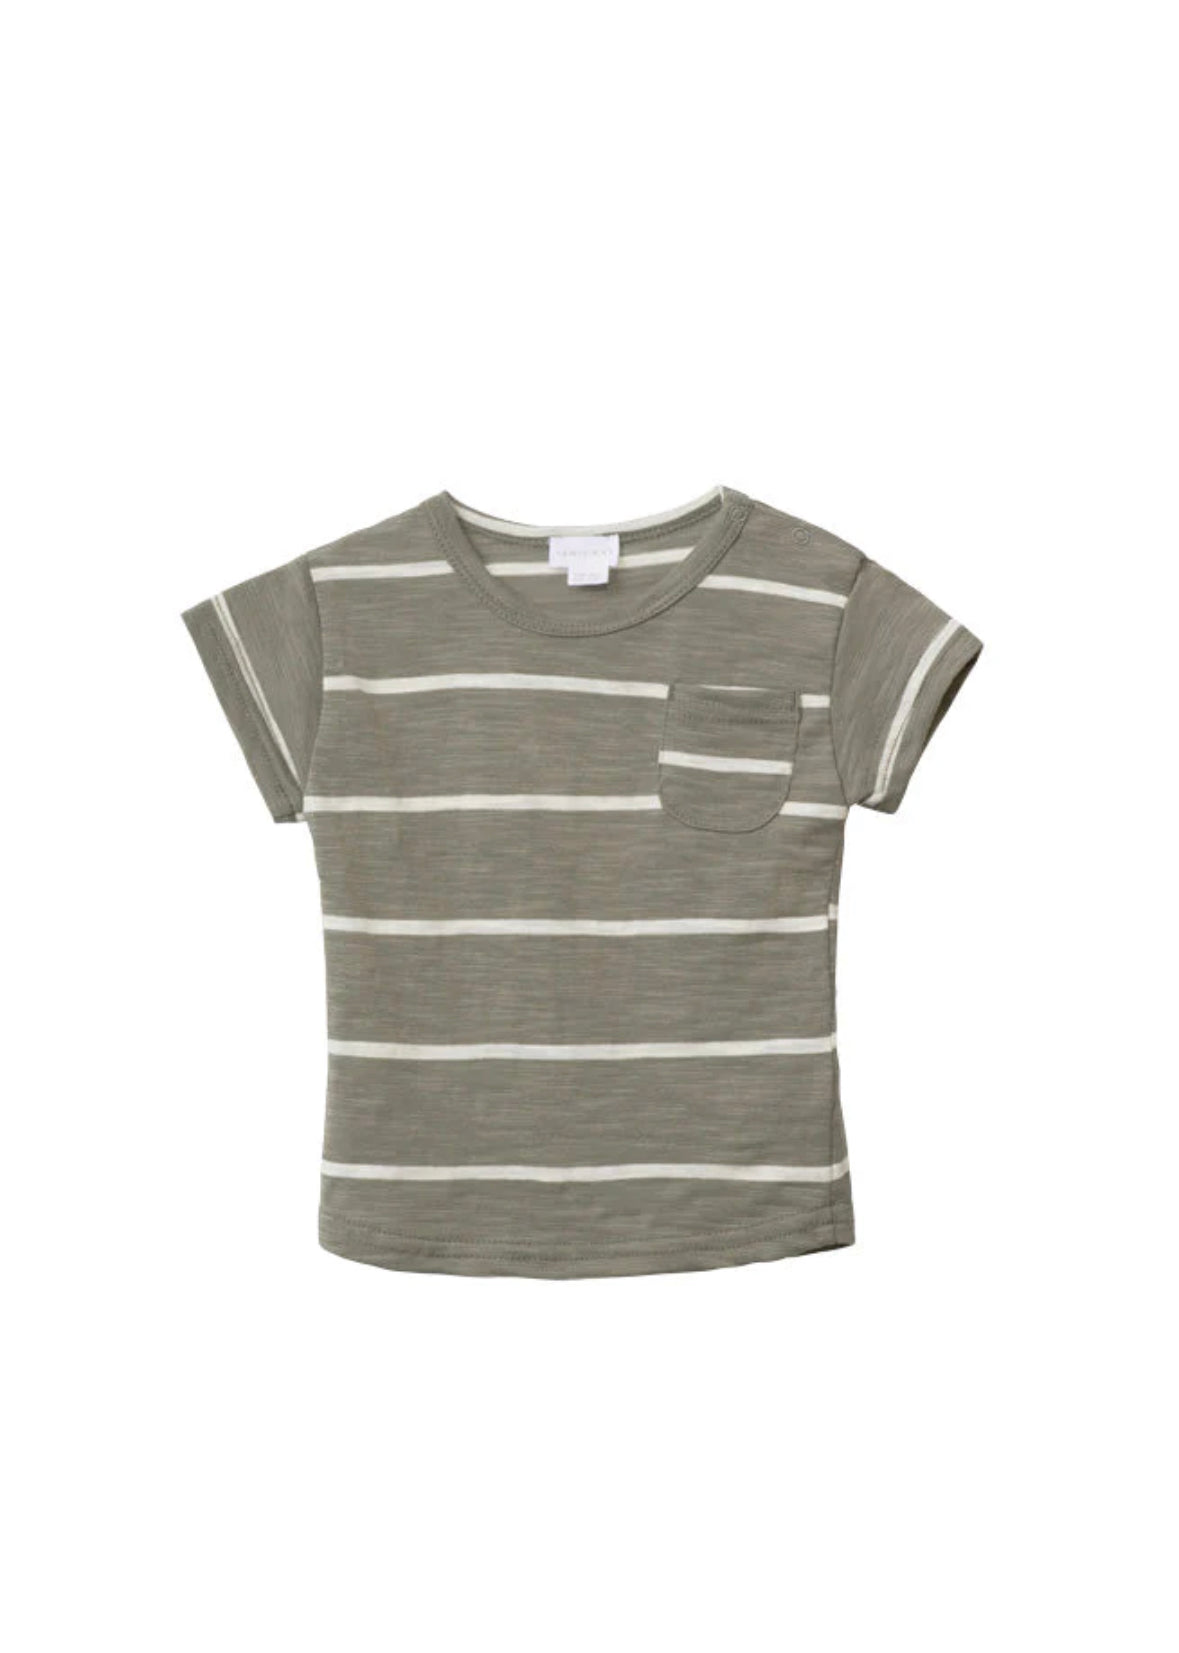 Landon Short Sleeve Tee - Fog/Ecru Stripe